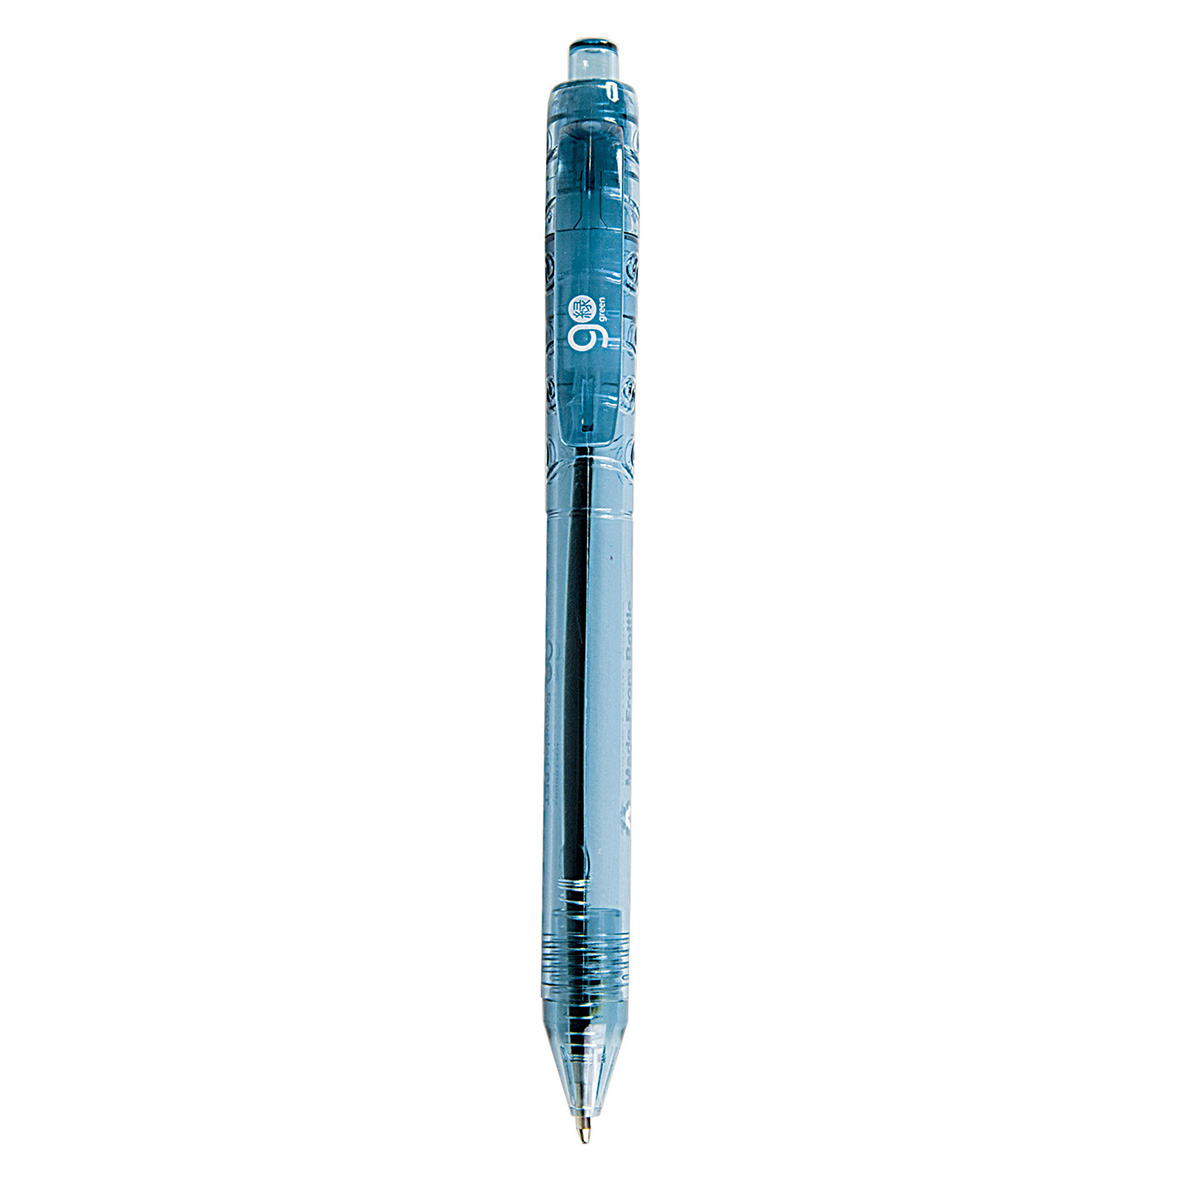 Stylo bille publicitaire plastique recycle cote1202 - stylo recycle - stylos ecologiques